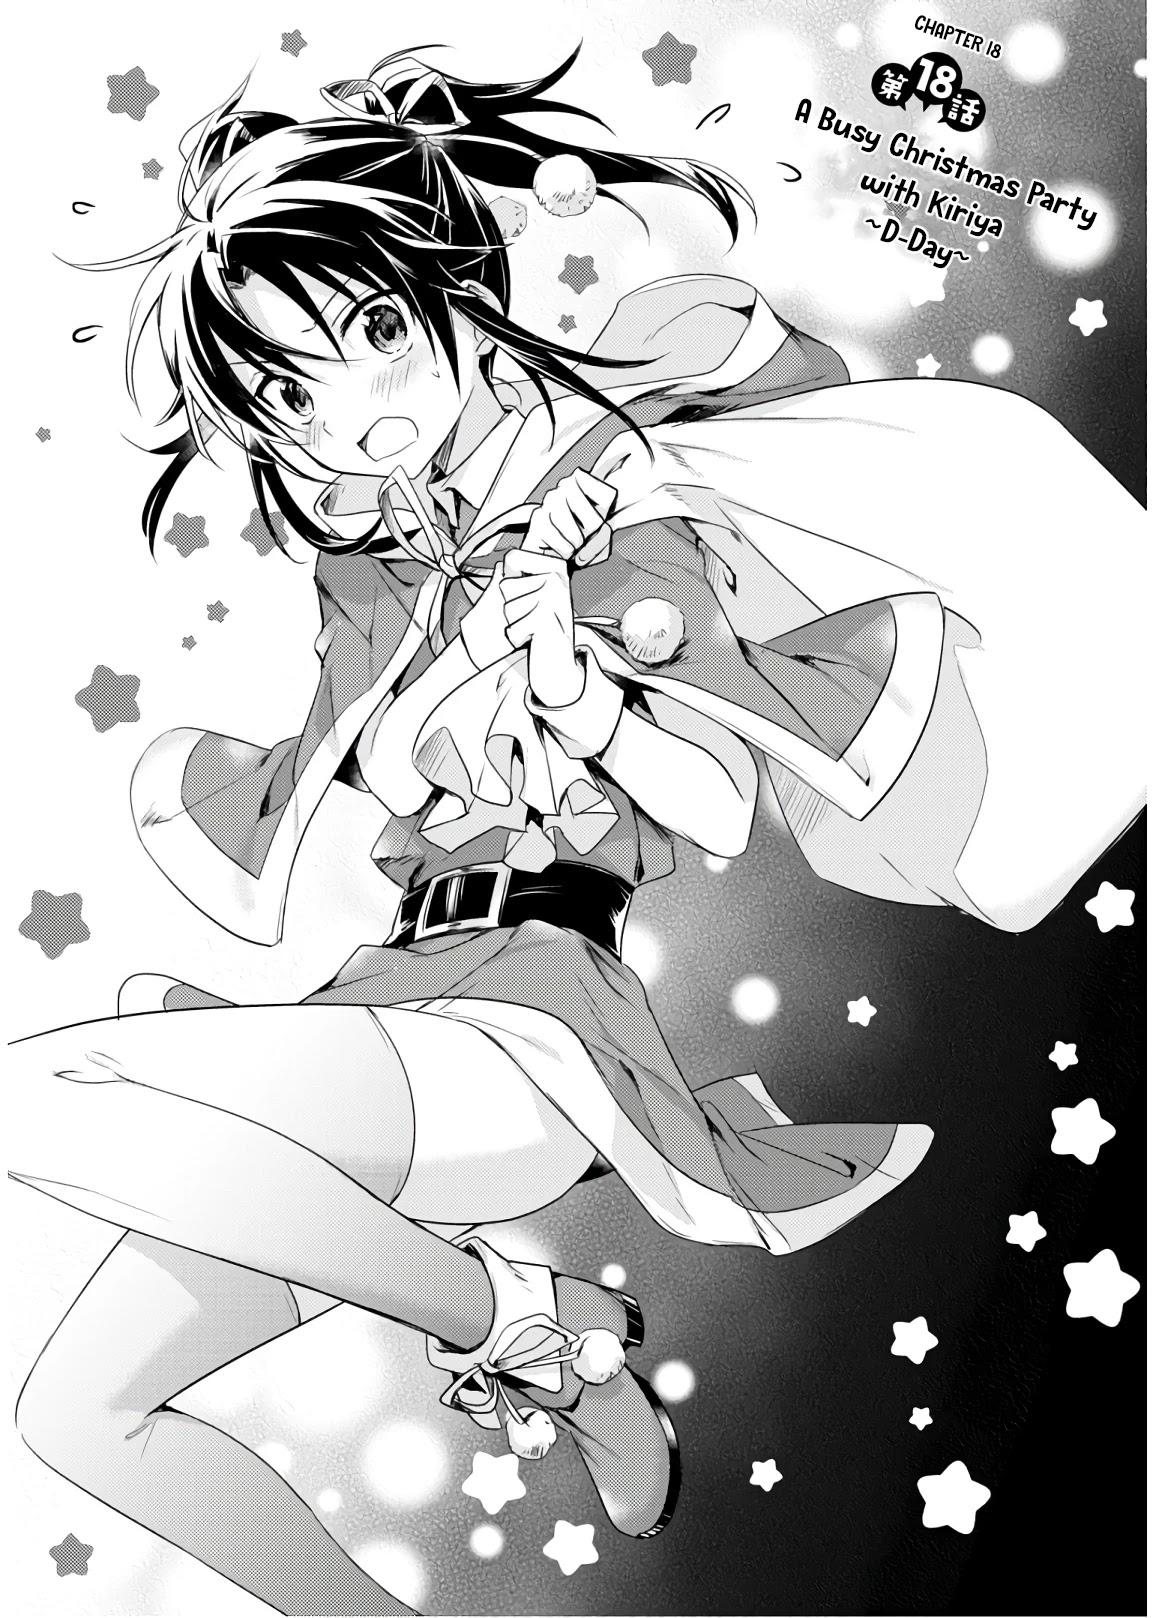 Megami-ryou no Ryoubo-kun. Capítulo 27.5 - Manga Online